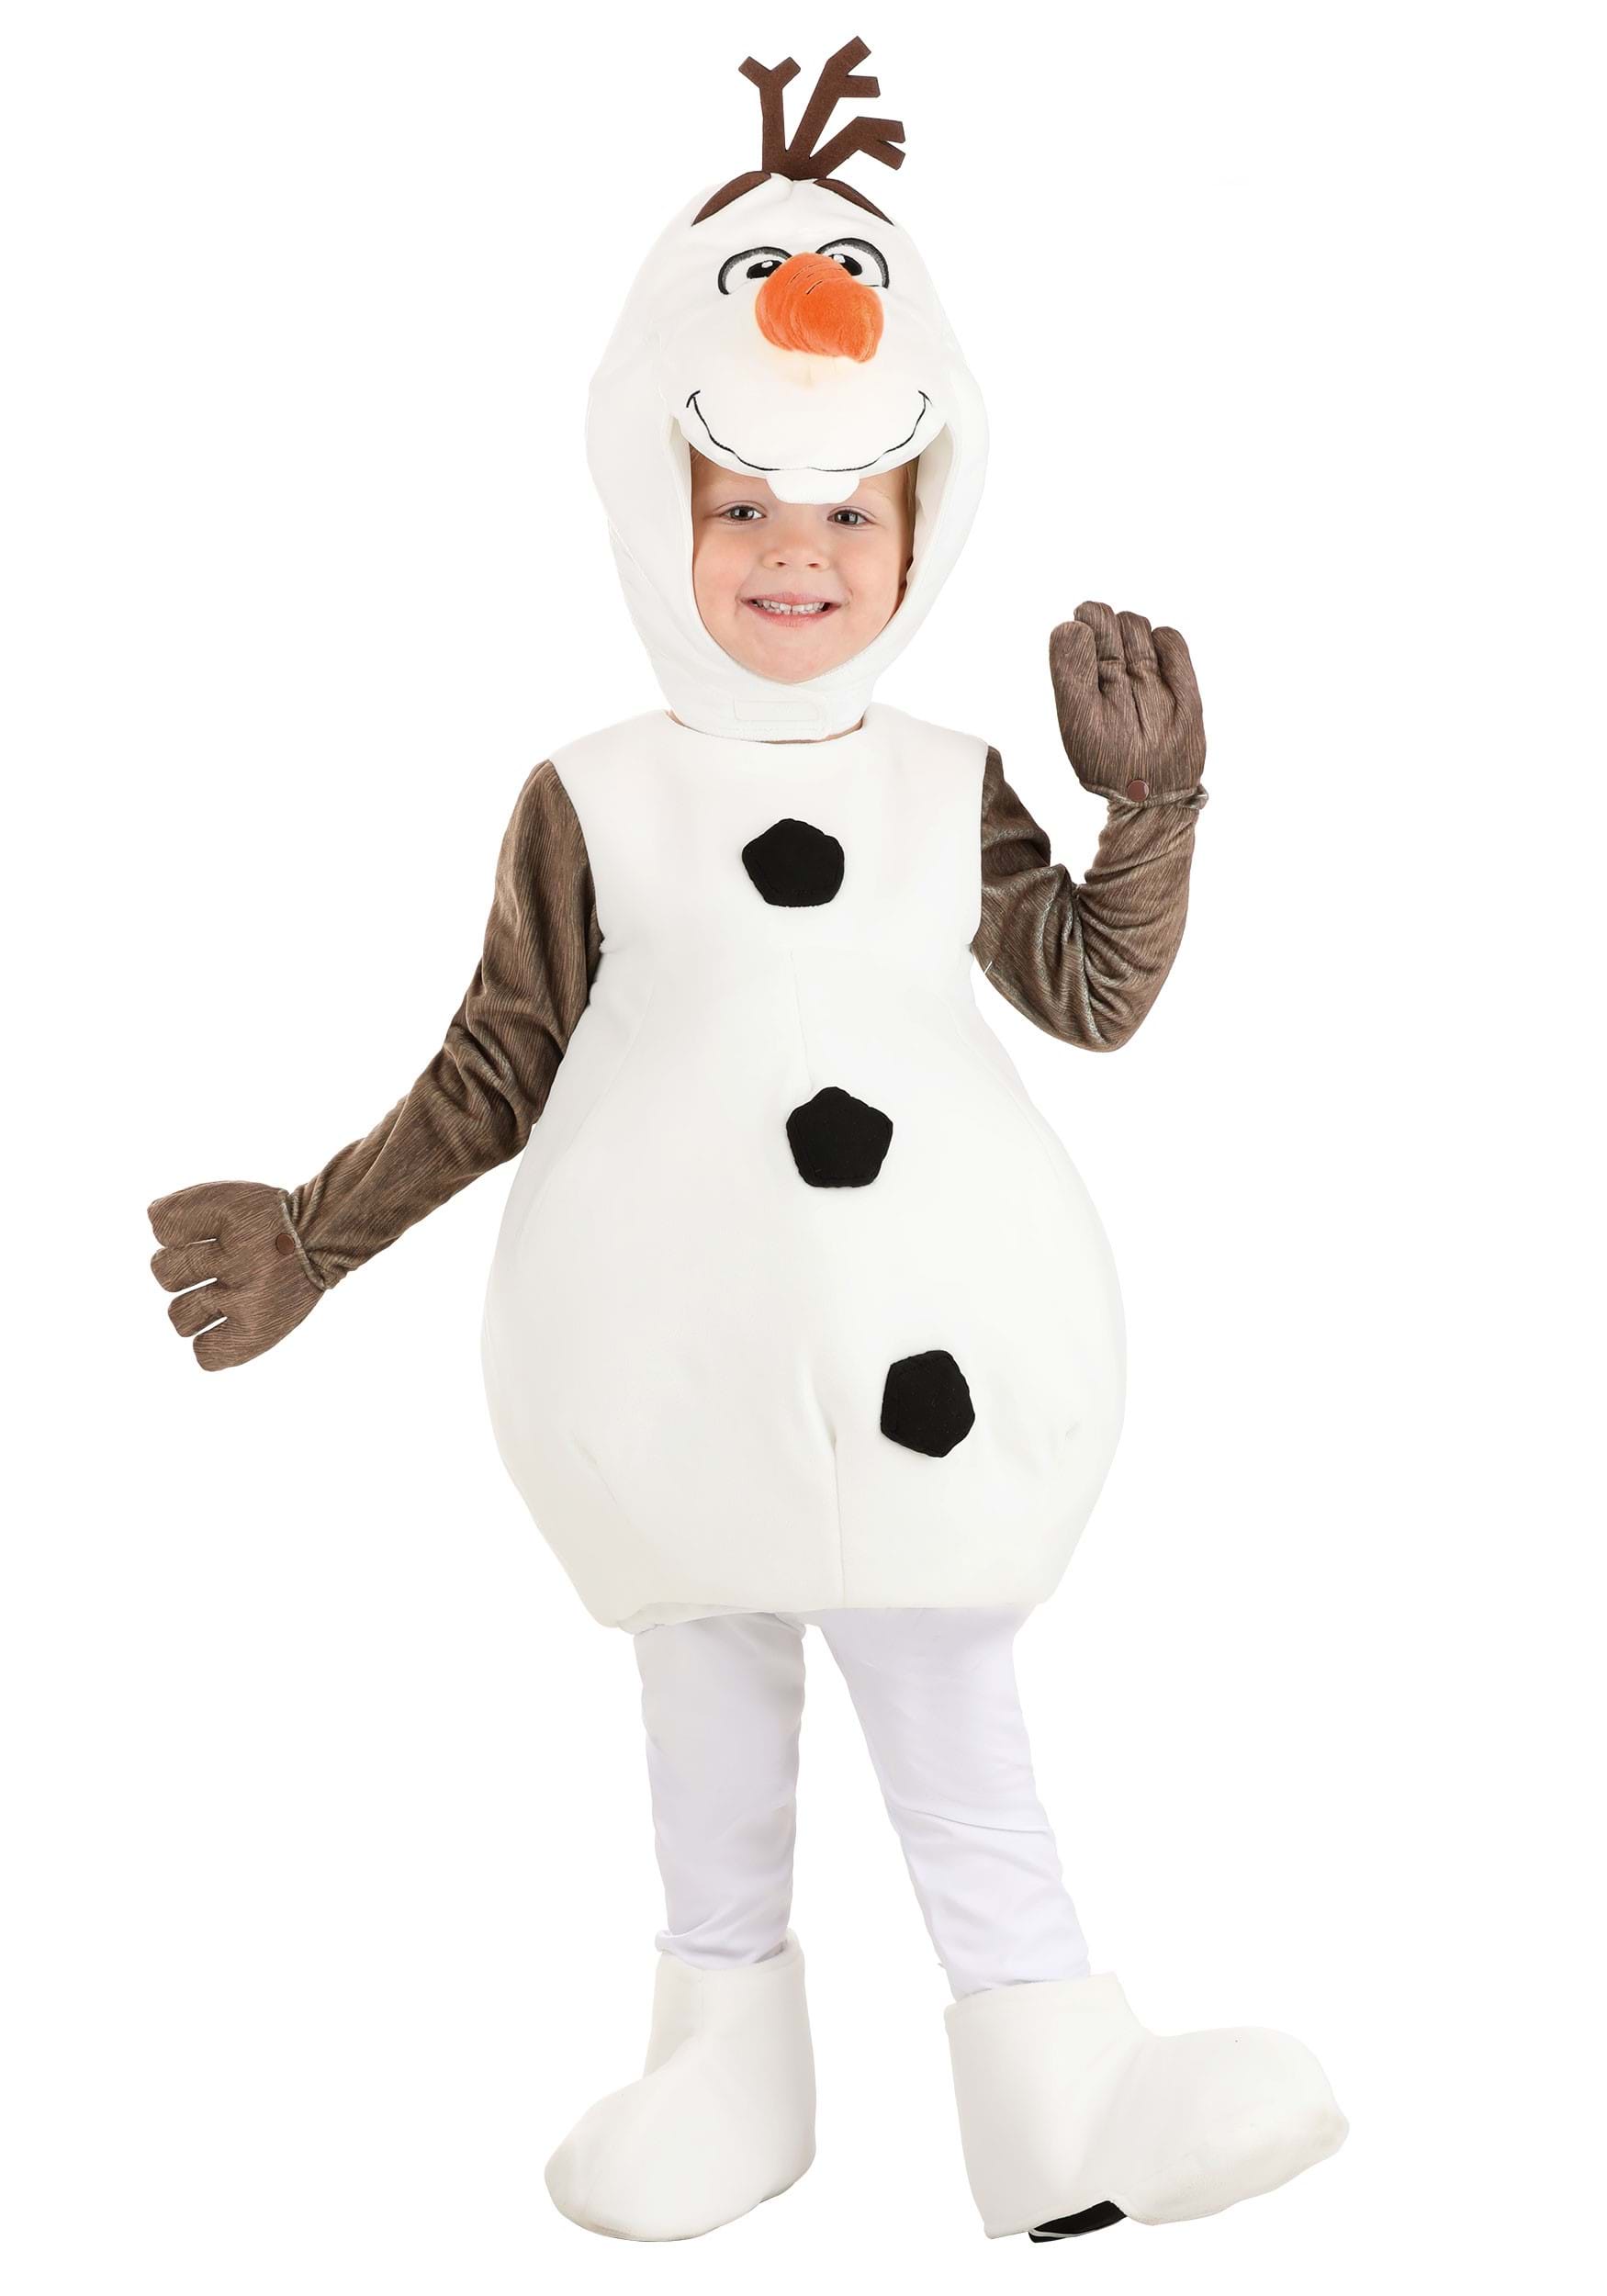 Photos - Fancy Dress FUN Costumes Olaf Frozen Toddler Costume Orange/Brown/White FUN349